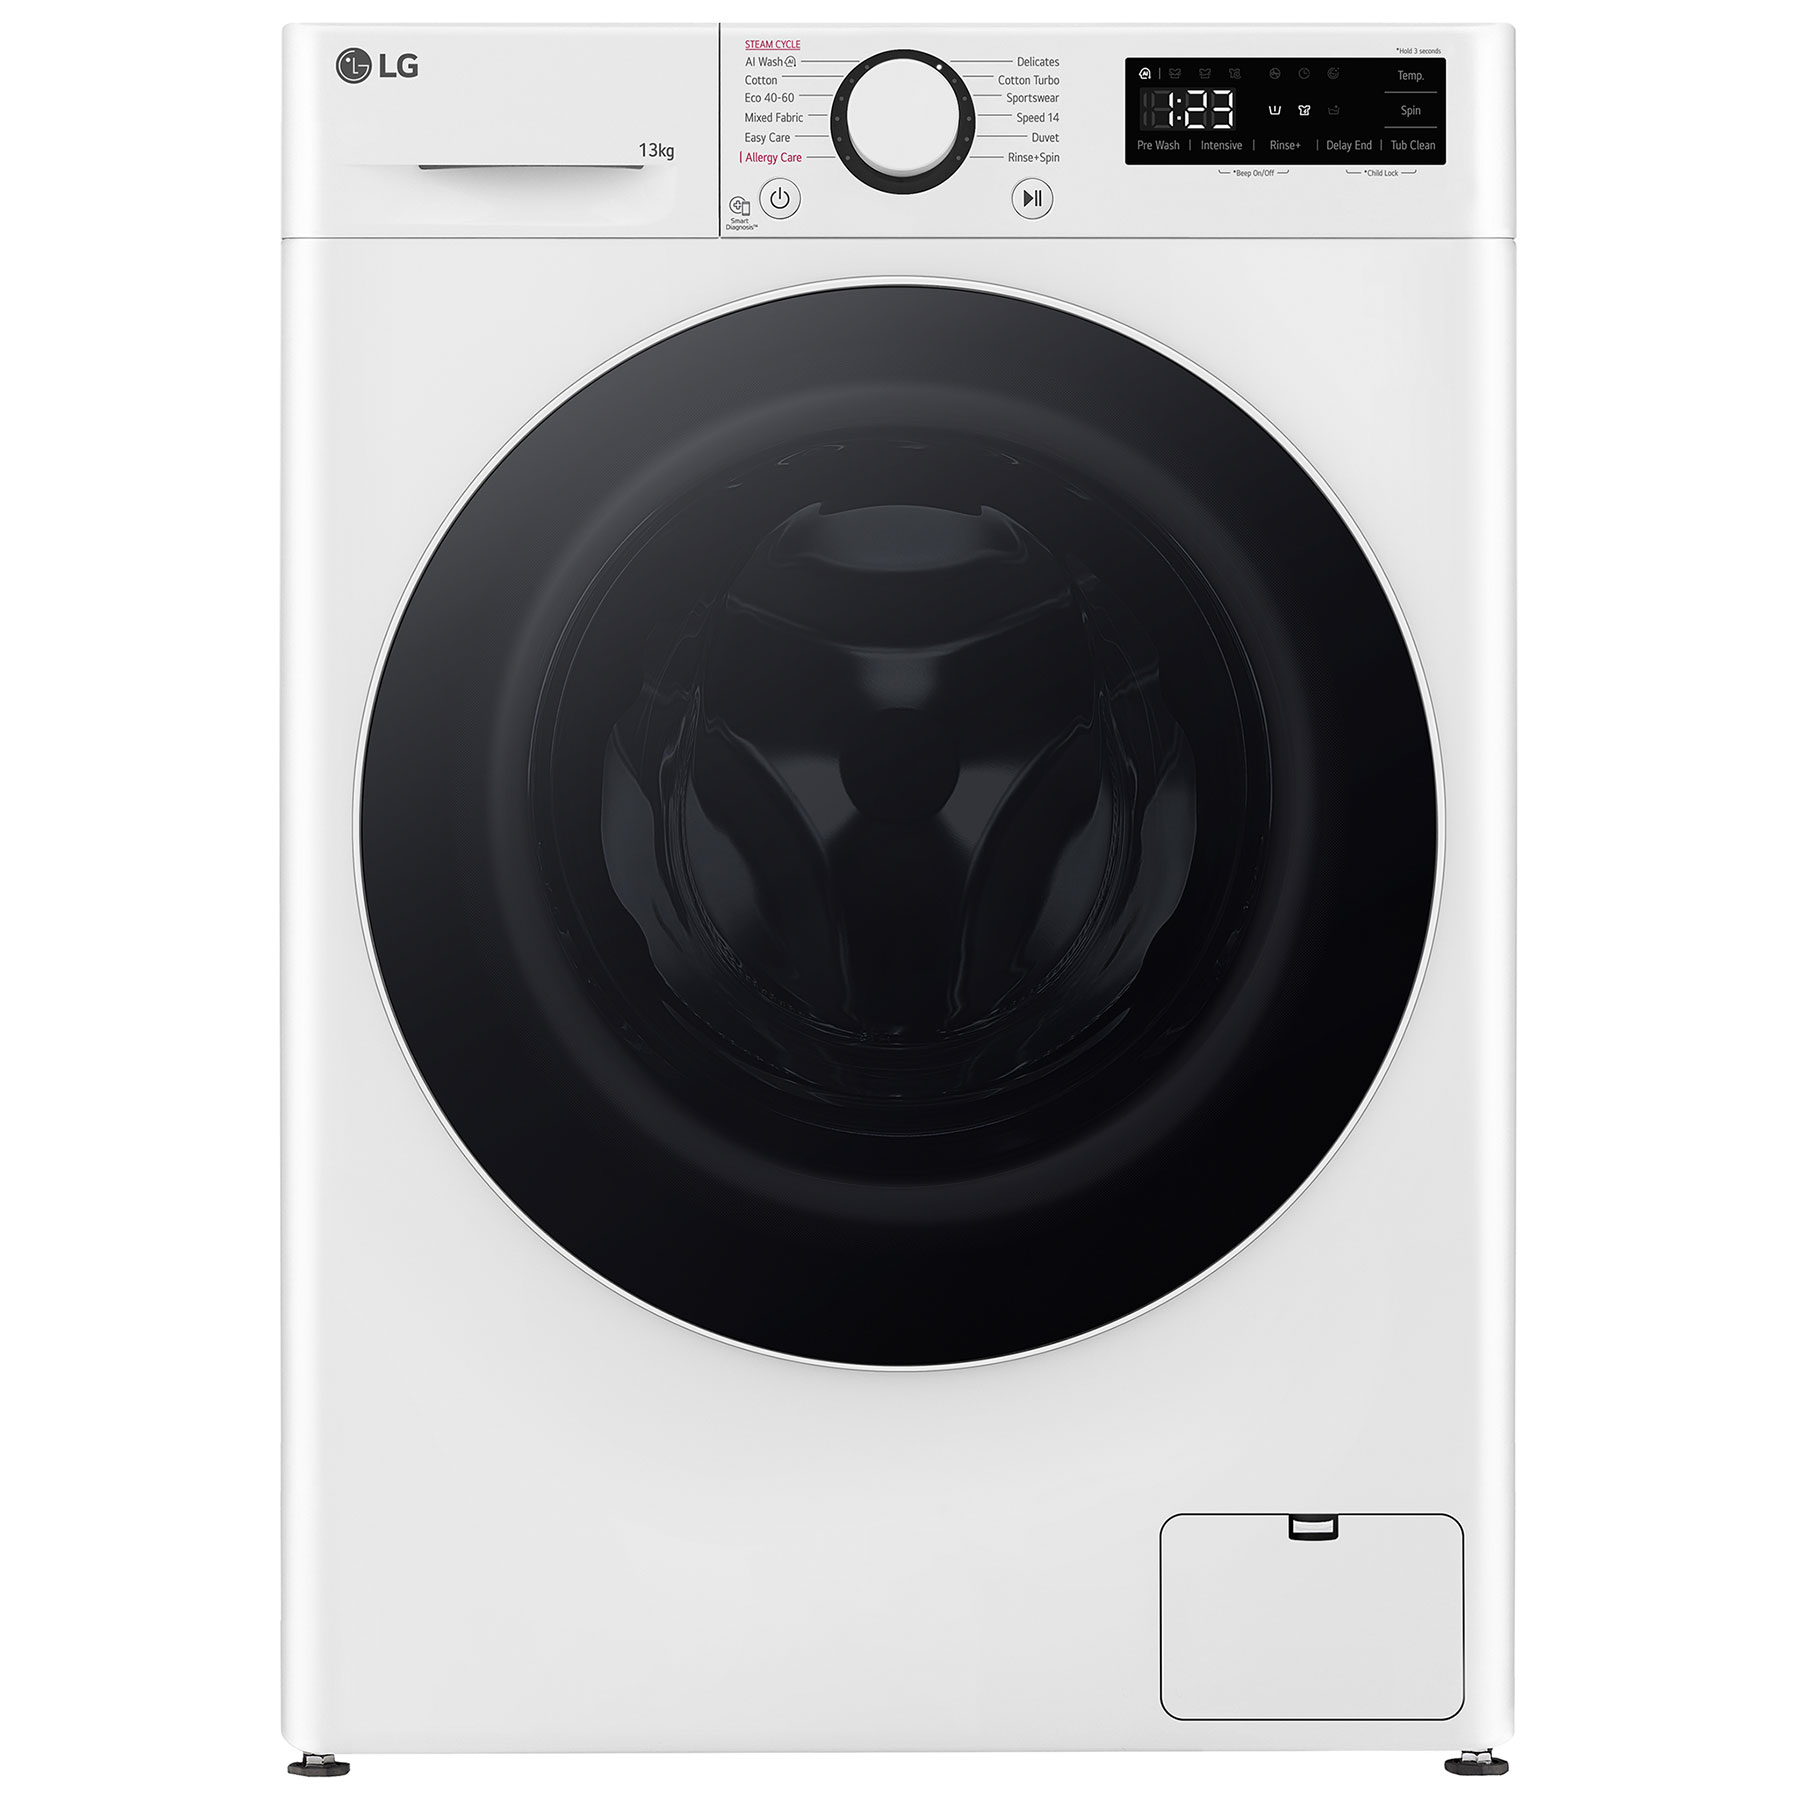 LG F4Y513WWLN1 Washing Machine in White 1400rpm 13kg A Rated